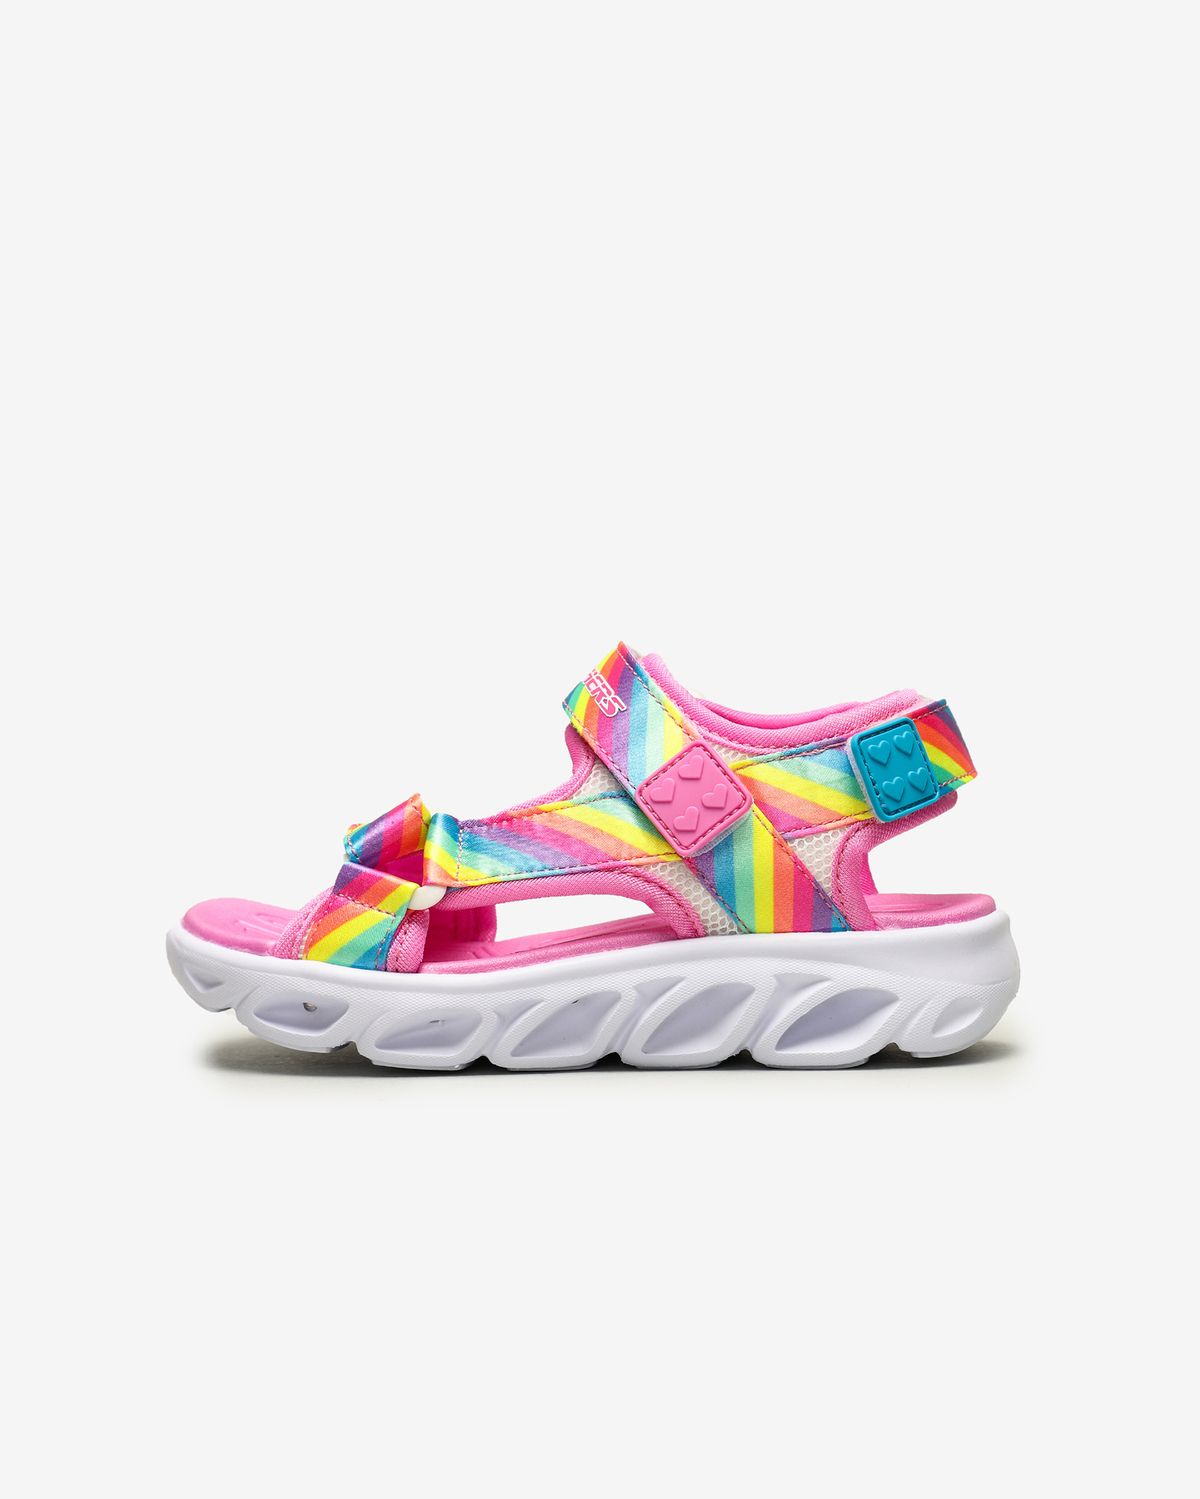 Skechers Hypno - Flash - Rainbow Lights Büyük Kız Çocuk Çok Renkli Işıklı Sandalet 20218l Mlt